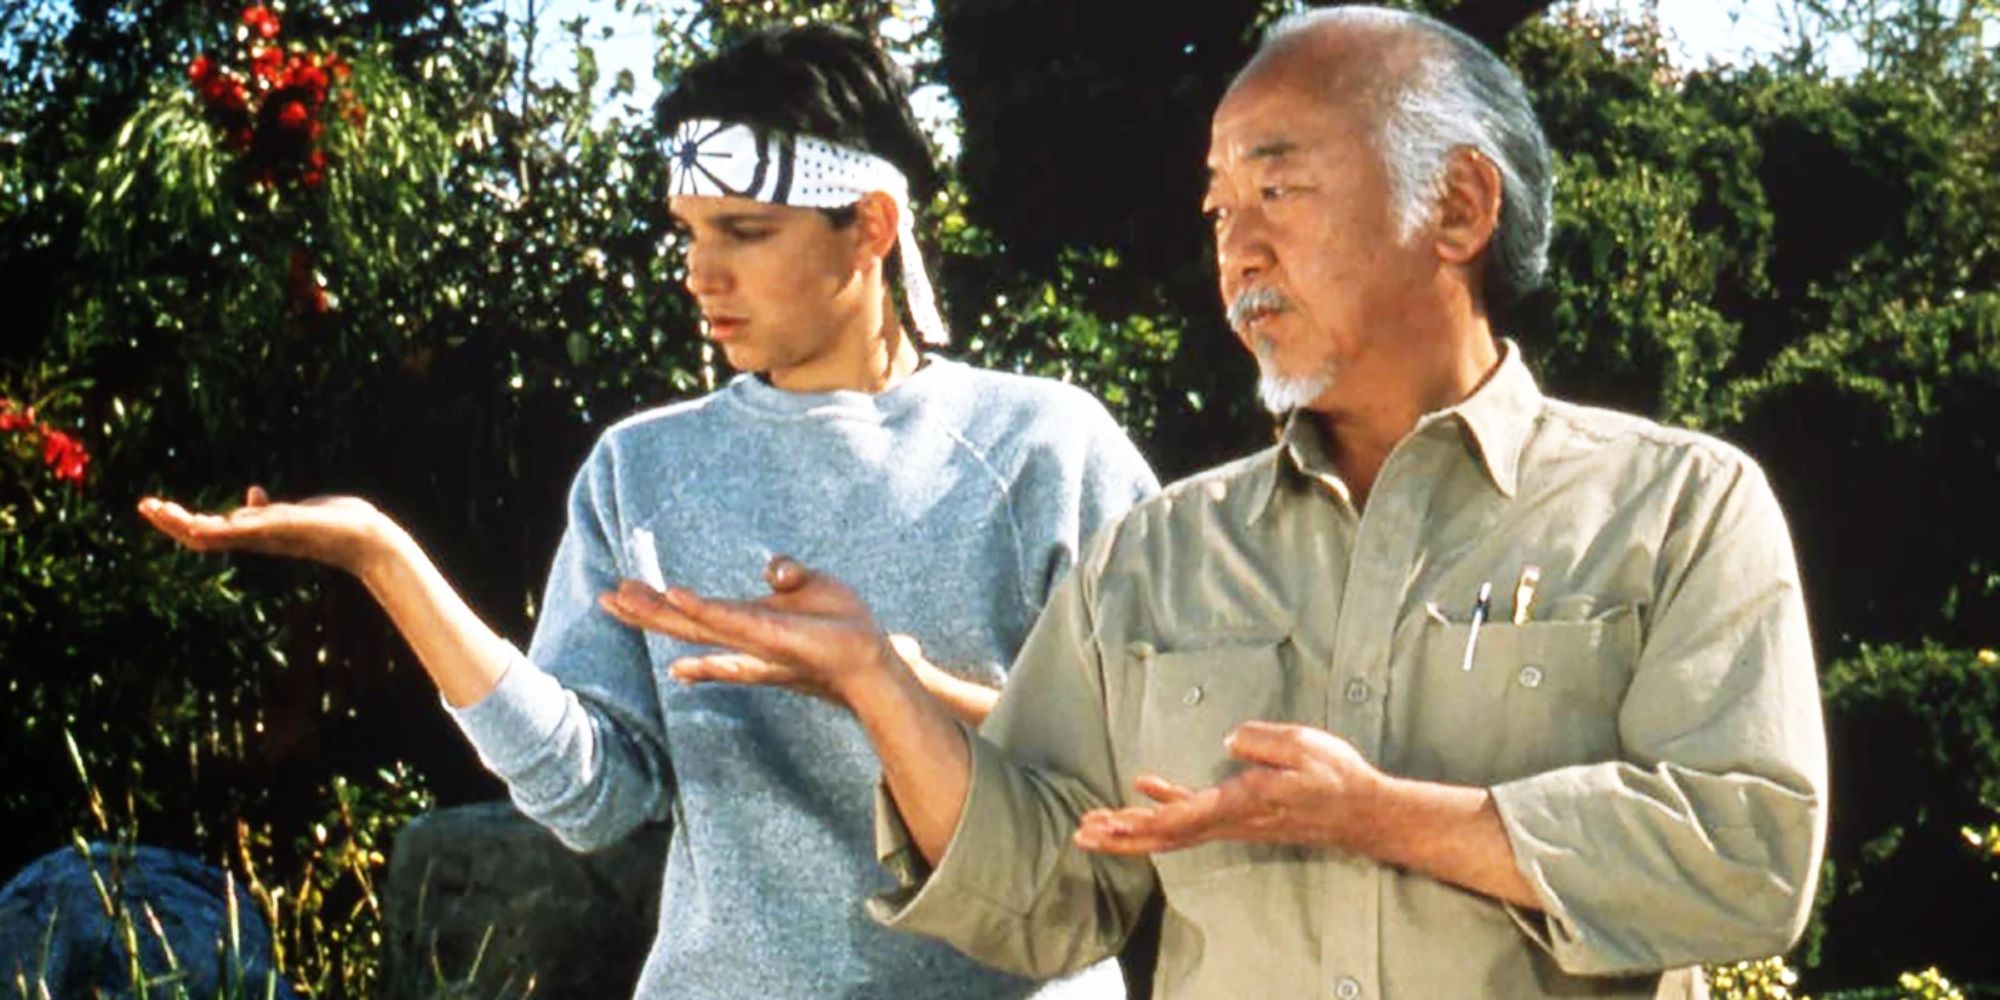 The Karate Kid franchise: Mr. Miyagi training Daniel LaRusso: The Karate Kid